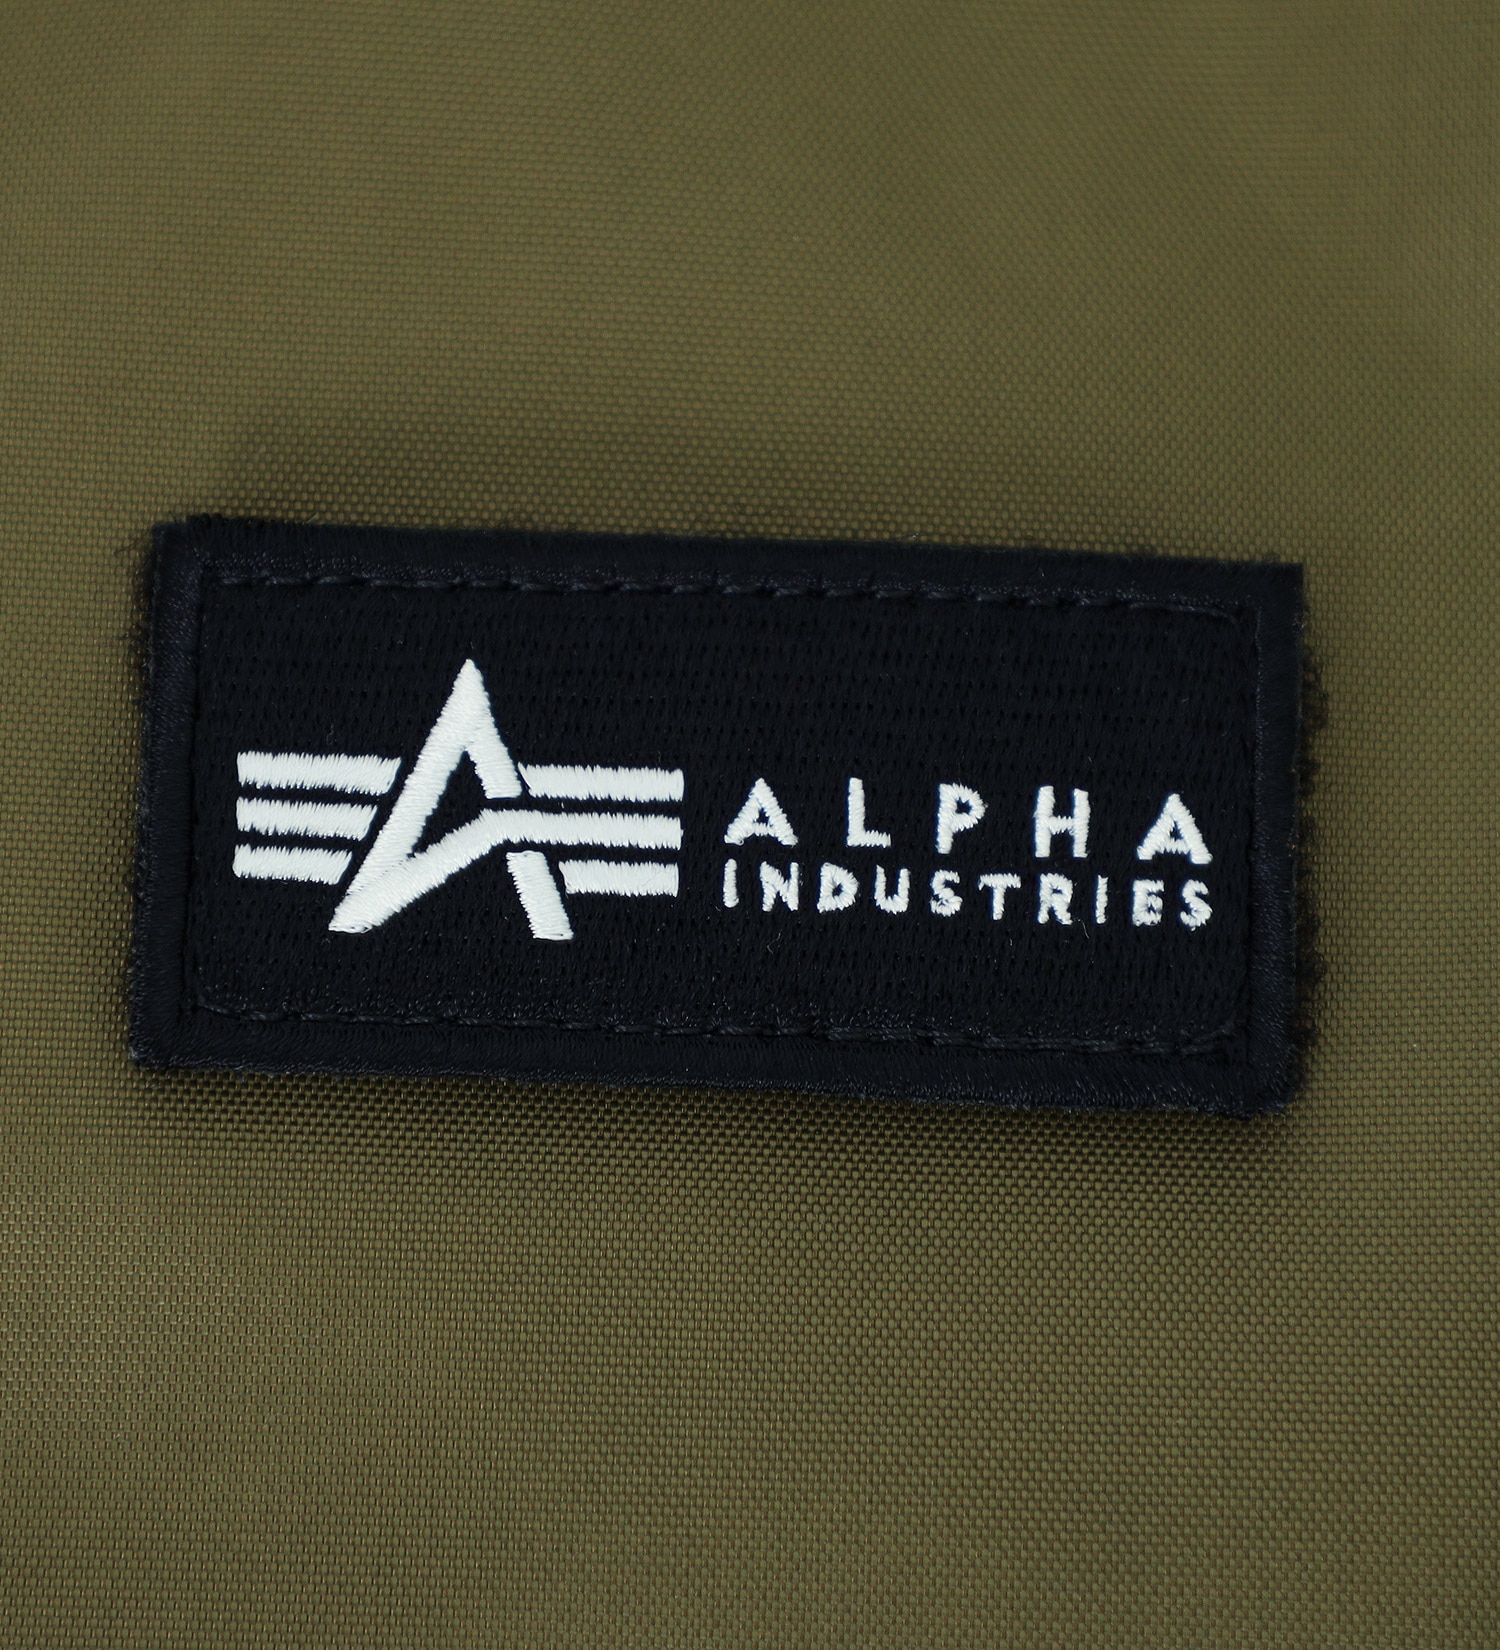 ALPHA(アルファ)のデイパック 20L(リュックサック)|バッグ/バックパック/リュック/メンズ|オリーブ